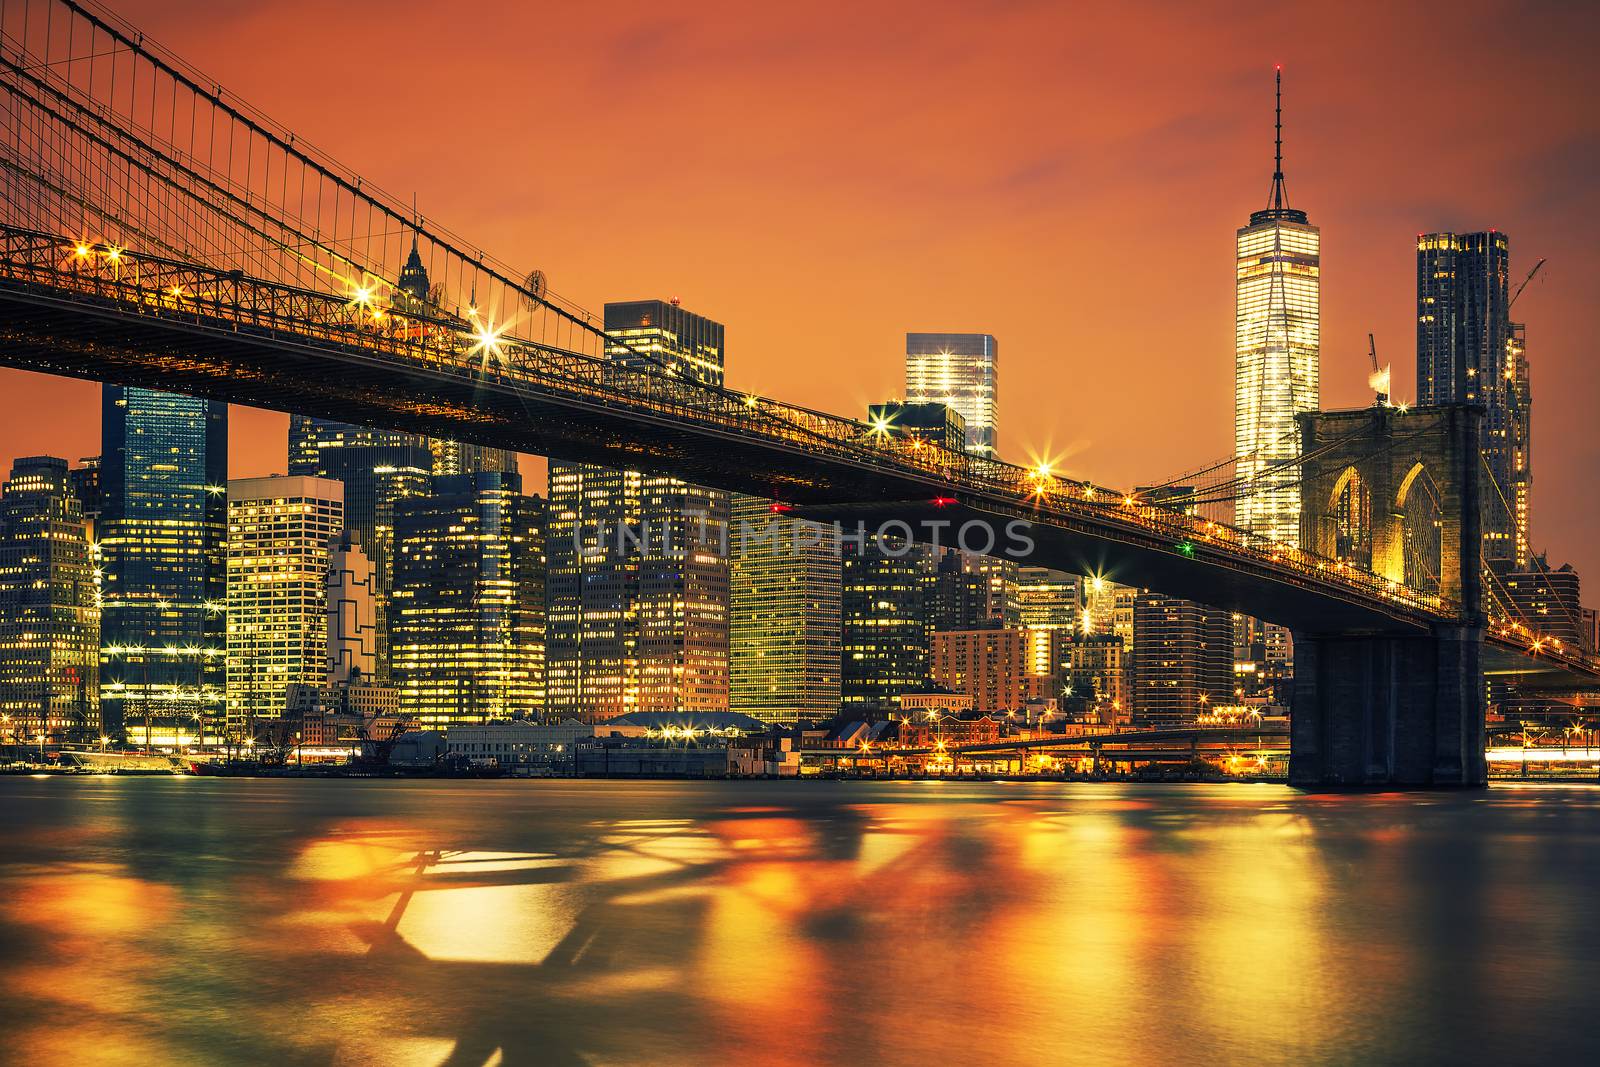 New York City Manhattan midtown at sunset by vwalakte